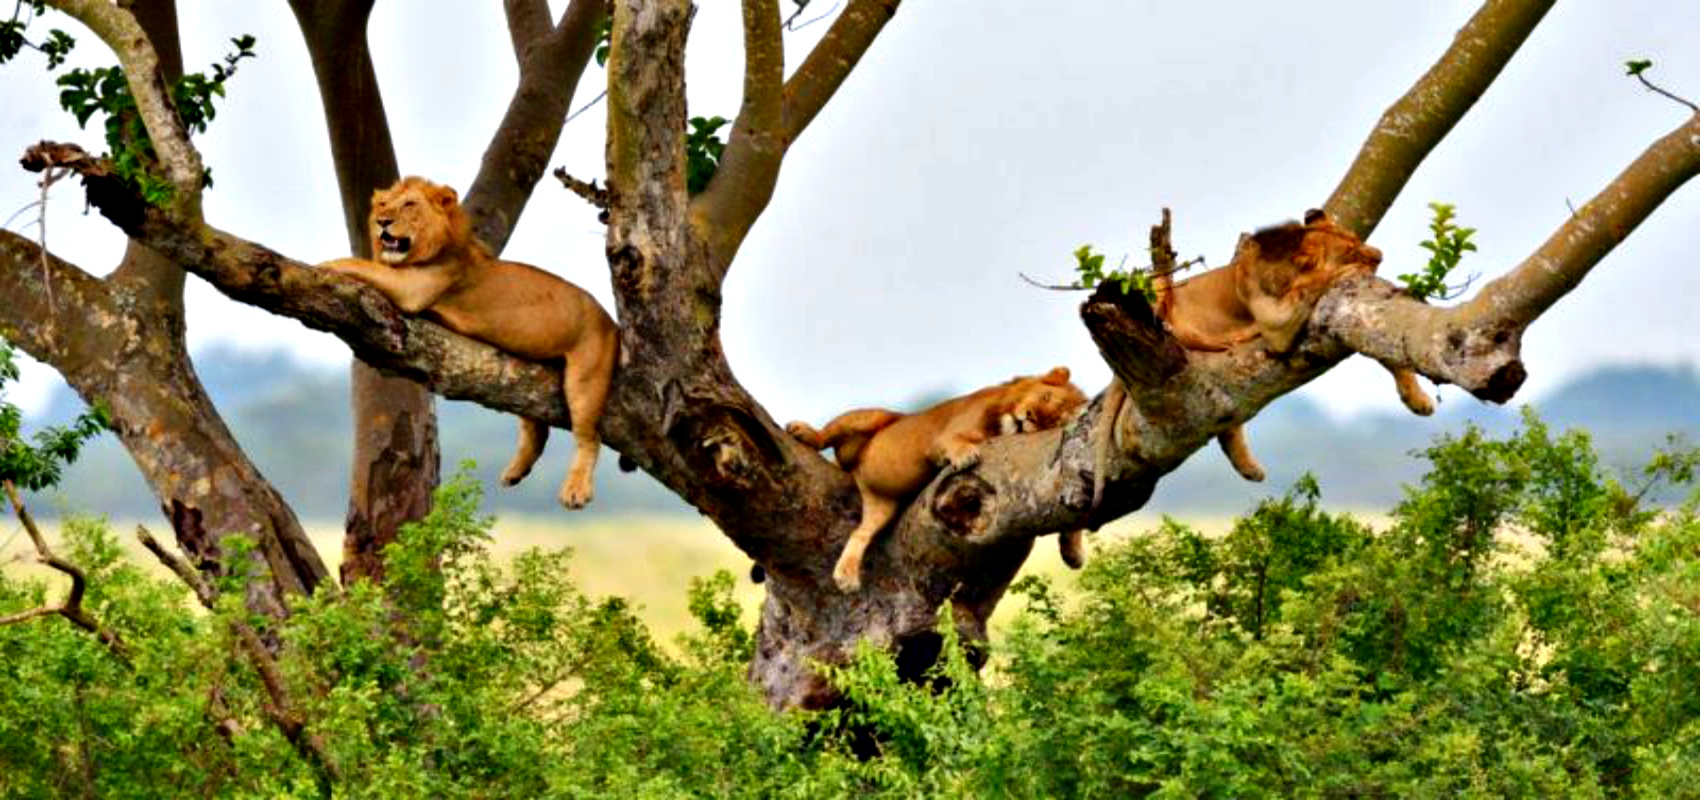 queen elizabeth national park uganda